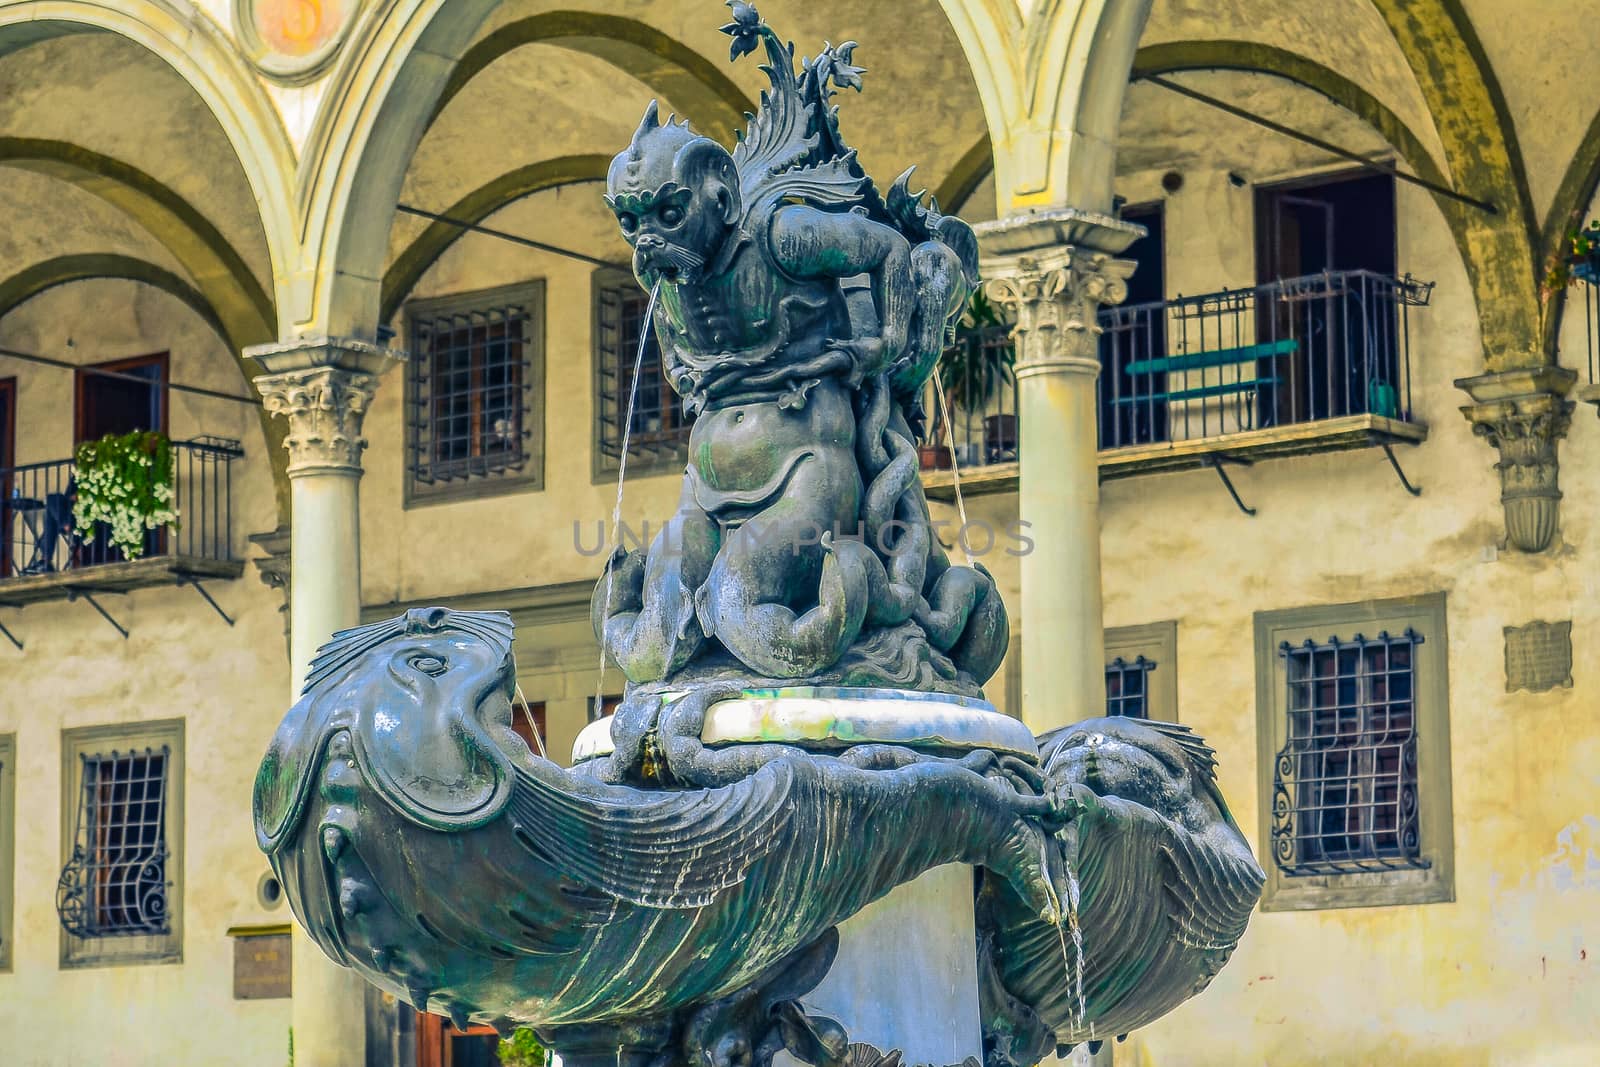 Fountain on the Piazza della Santissima Annunziata in the city of Florence, region of Tuscany, Italy. Sculptor Pietro Tacca